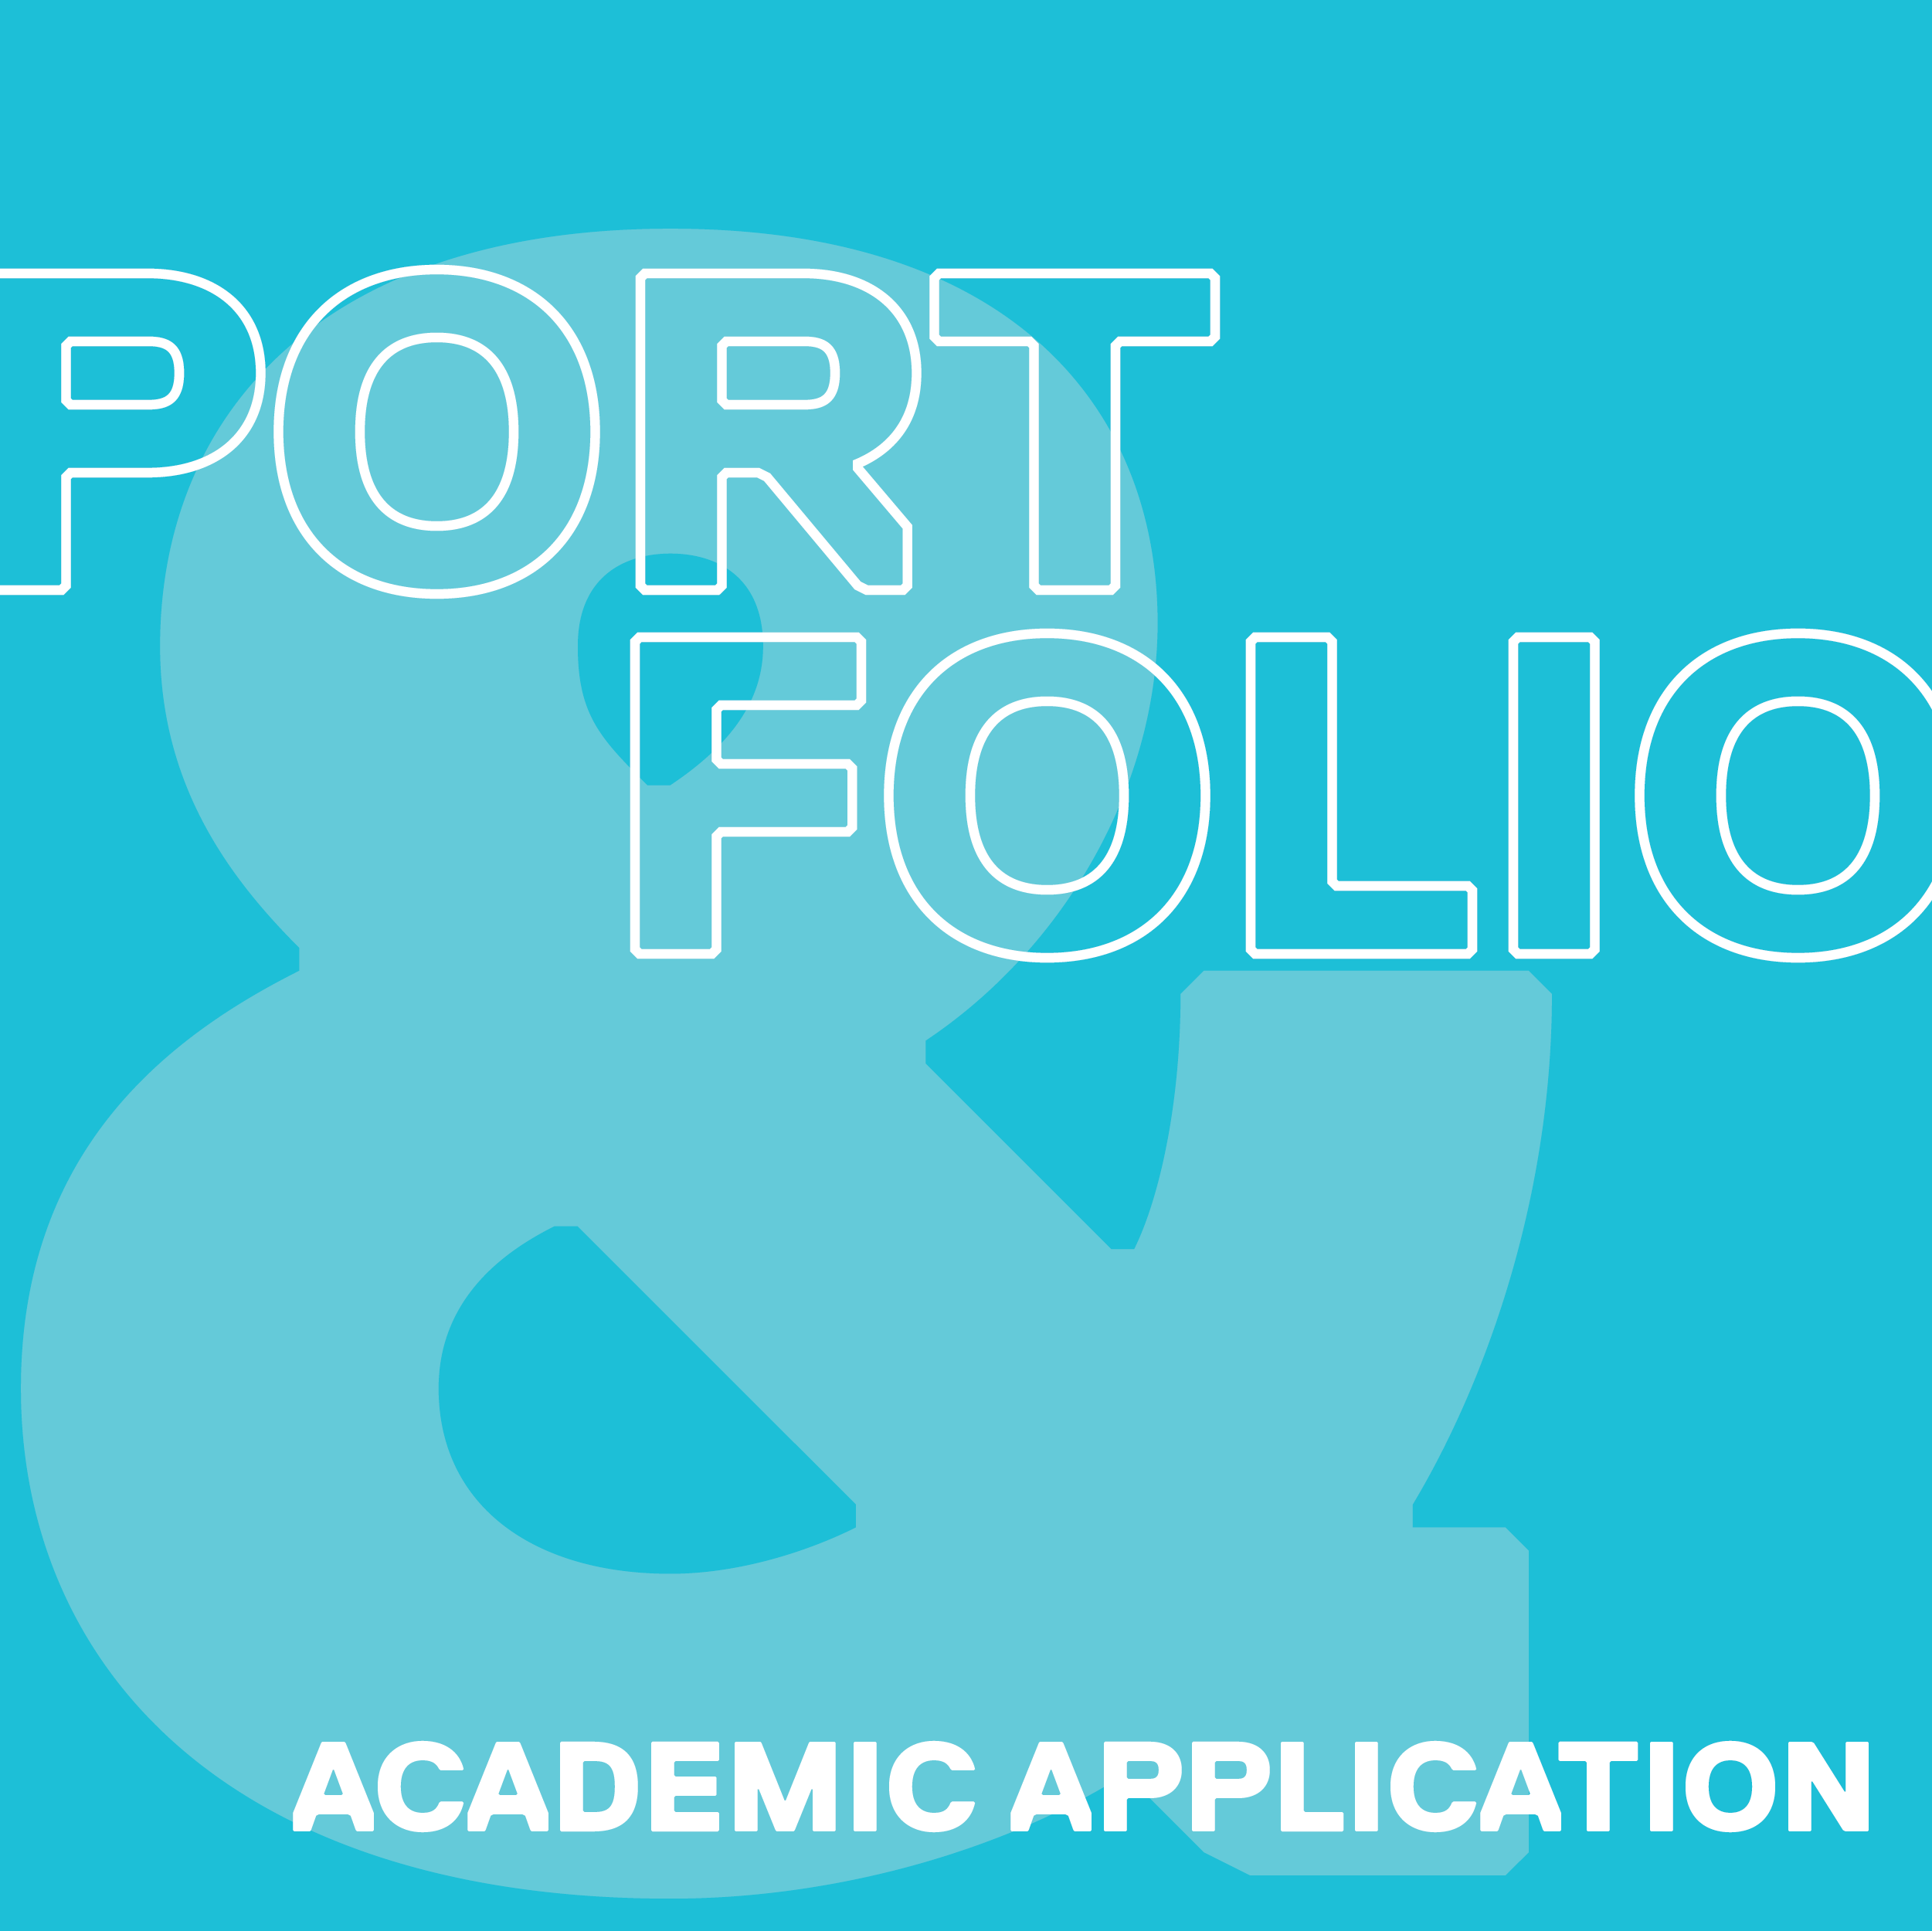 Portfolio & Academic Application